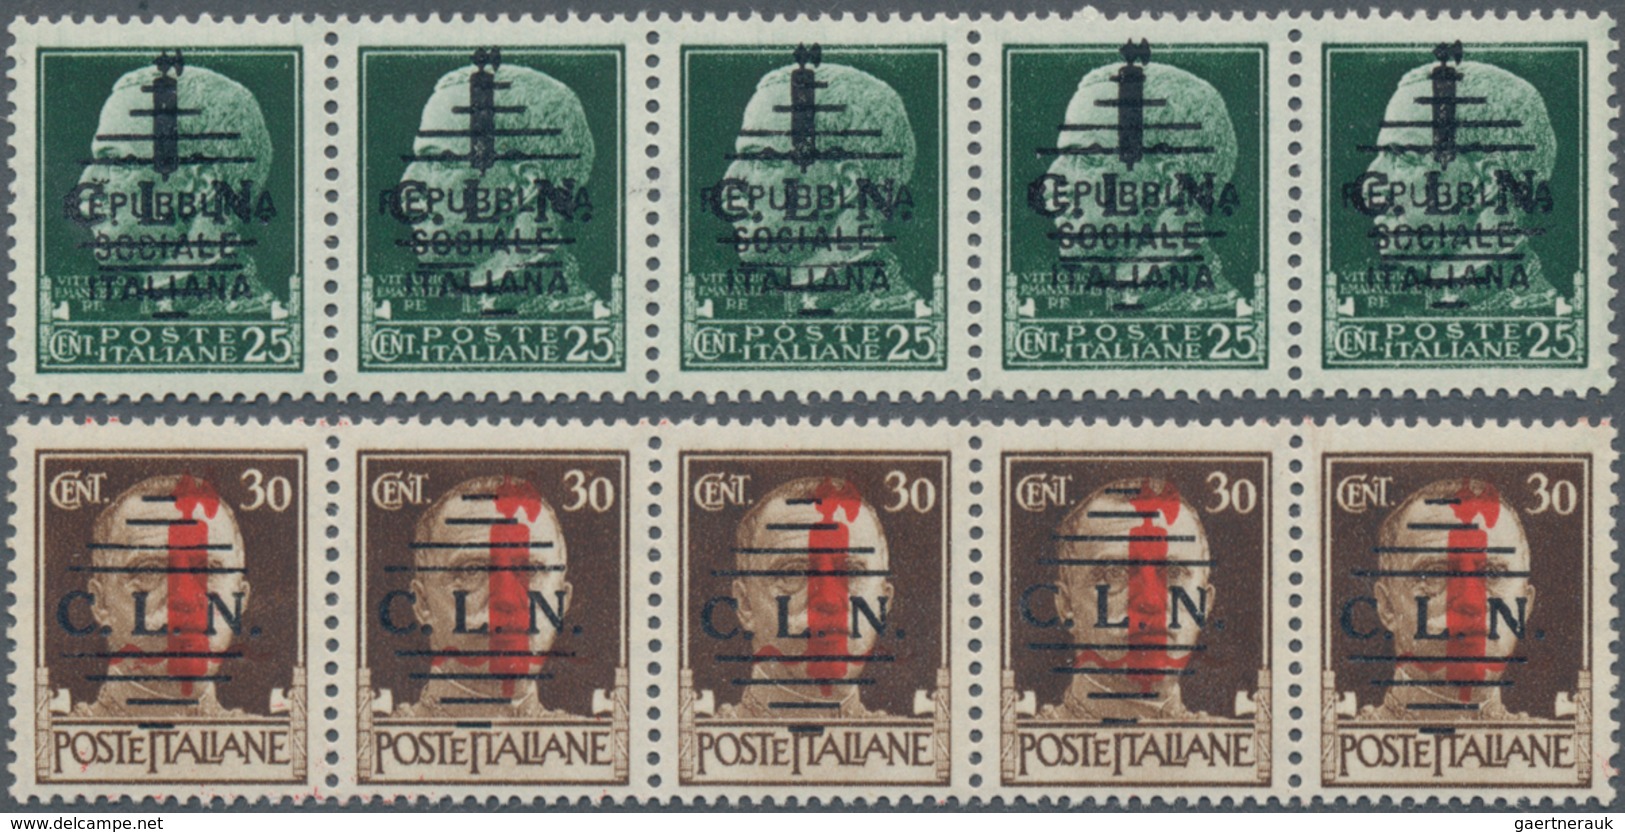 Italien - Lokalausgaben 1944/45 - Torino: 1944, 25 C, 30 C, 50 C and 75 C with overprint "C.L.N." on